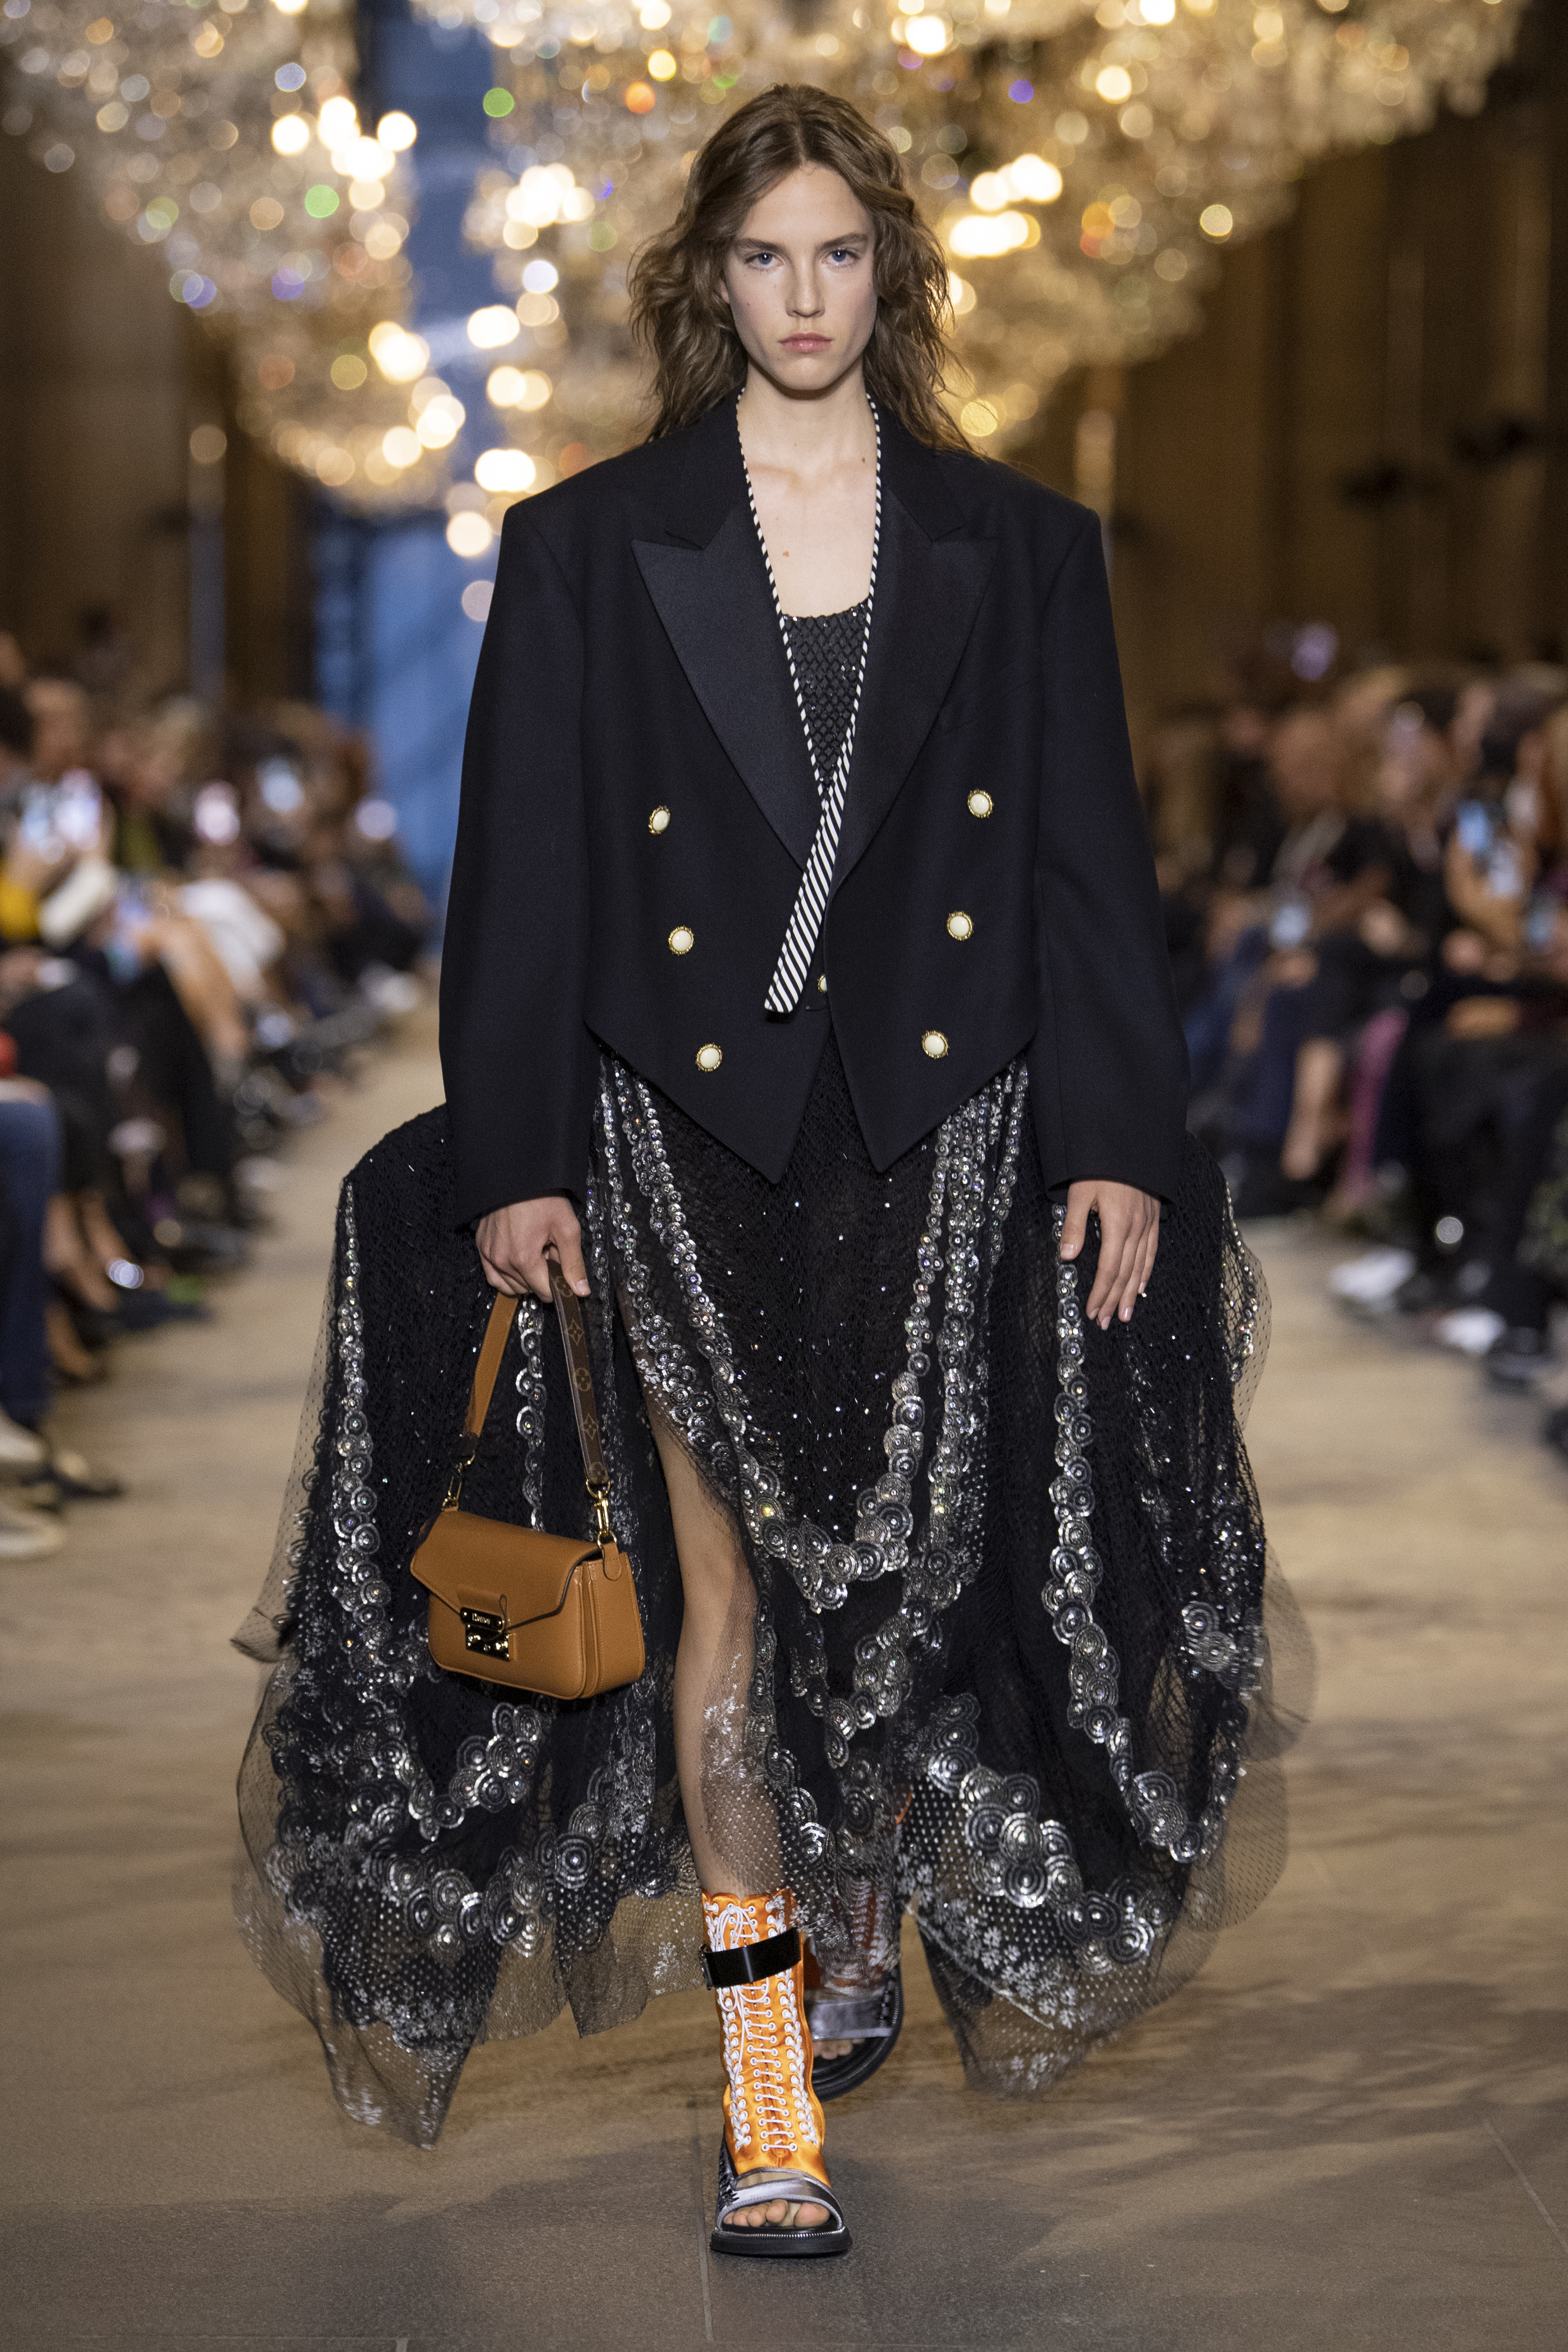 PHOTOS - Défilé Louis Vuitton printemps-été 2022 - Gala